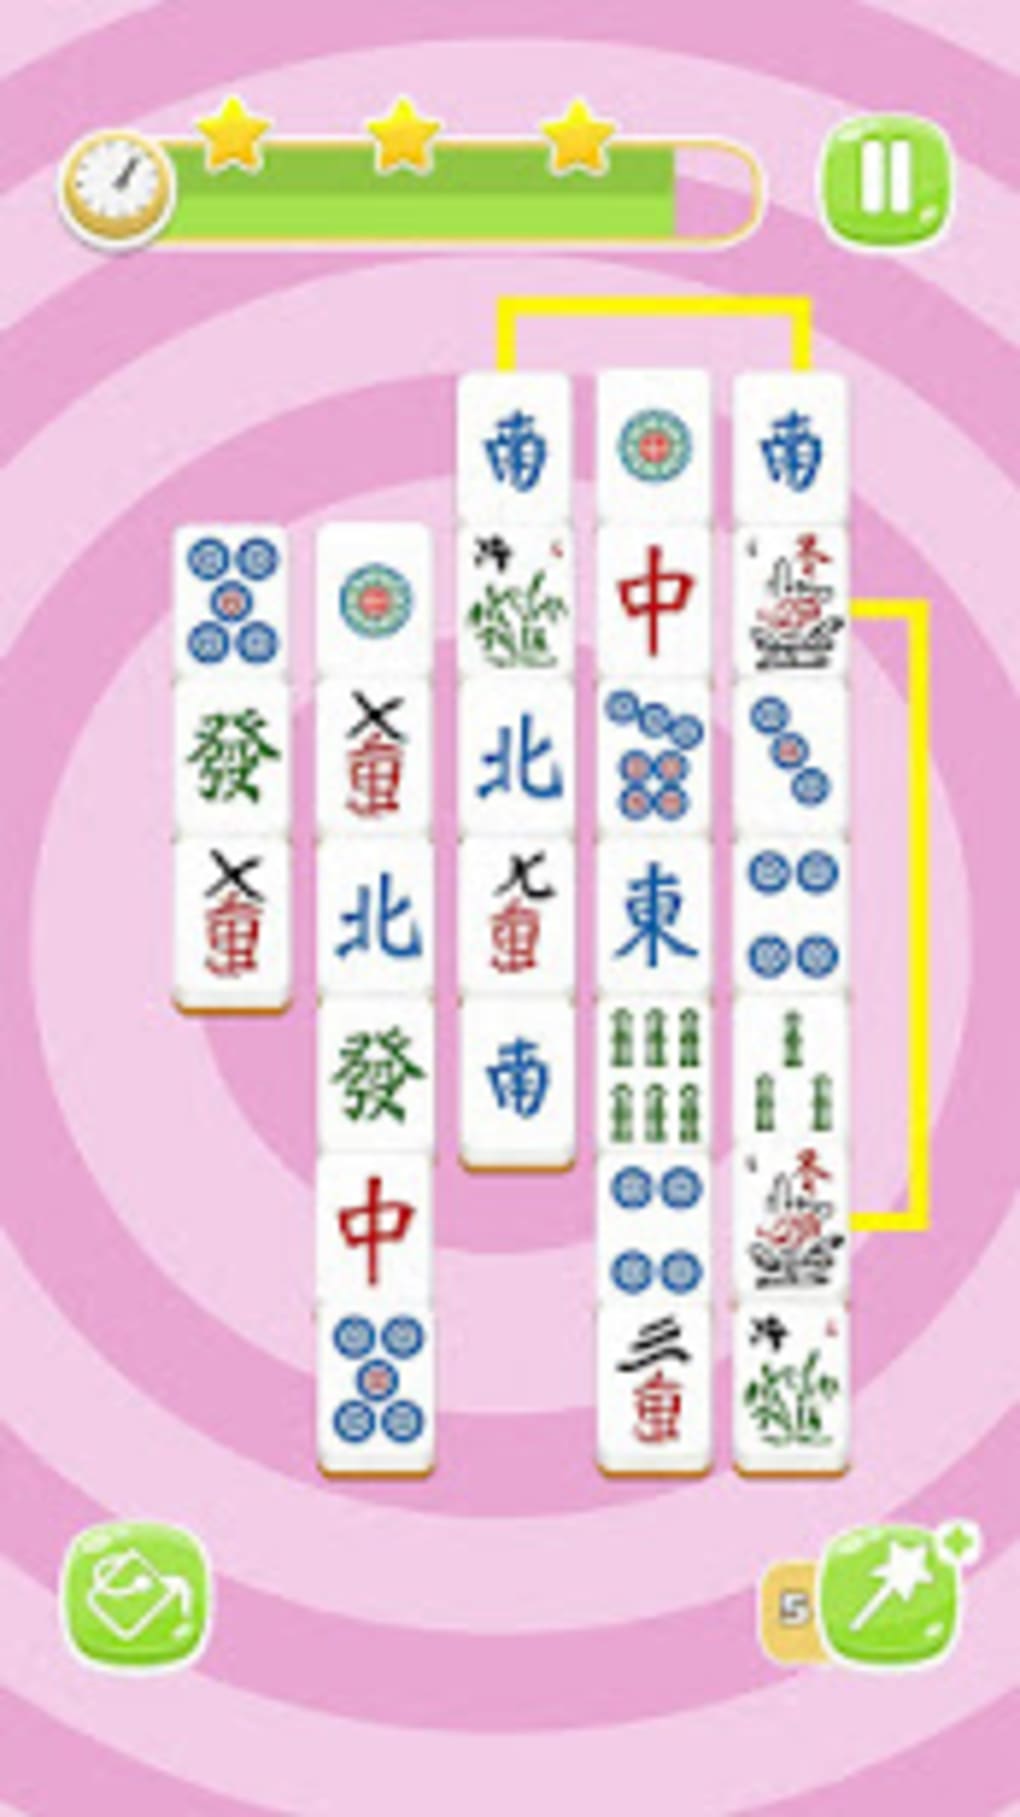 Onet Mahjong Connect Jogo – Apps no Google Play